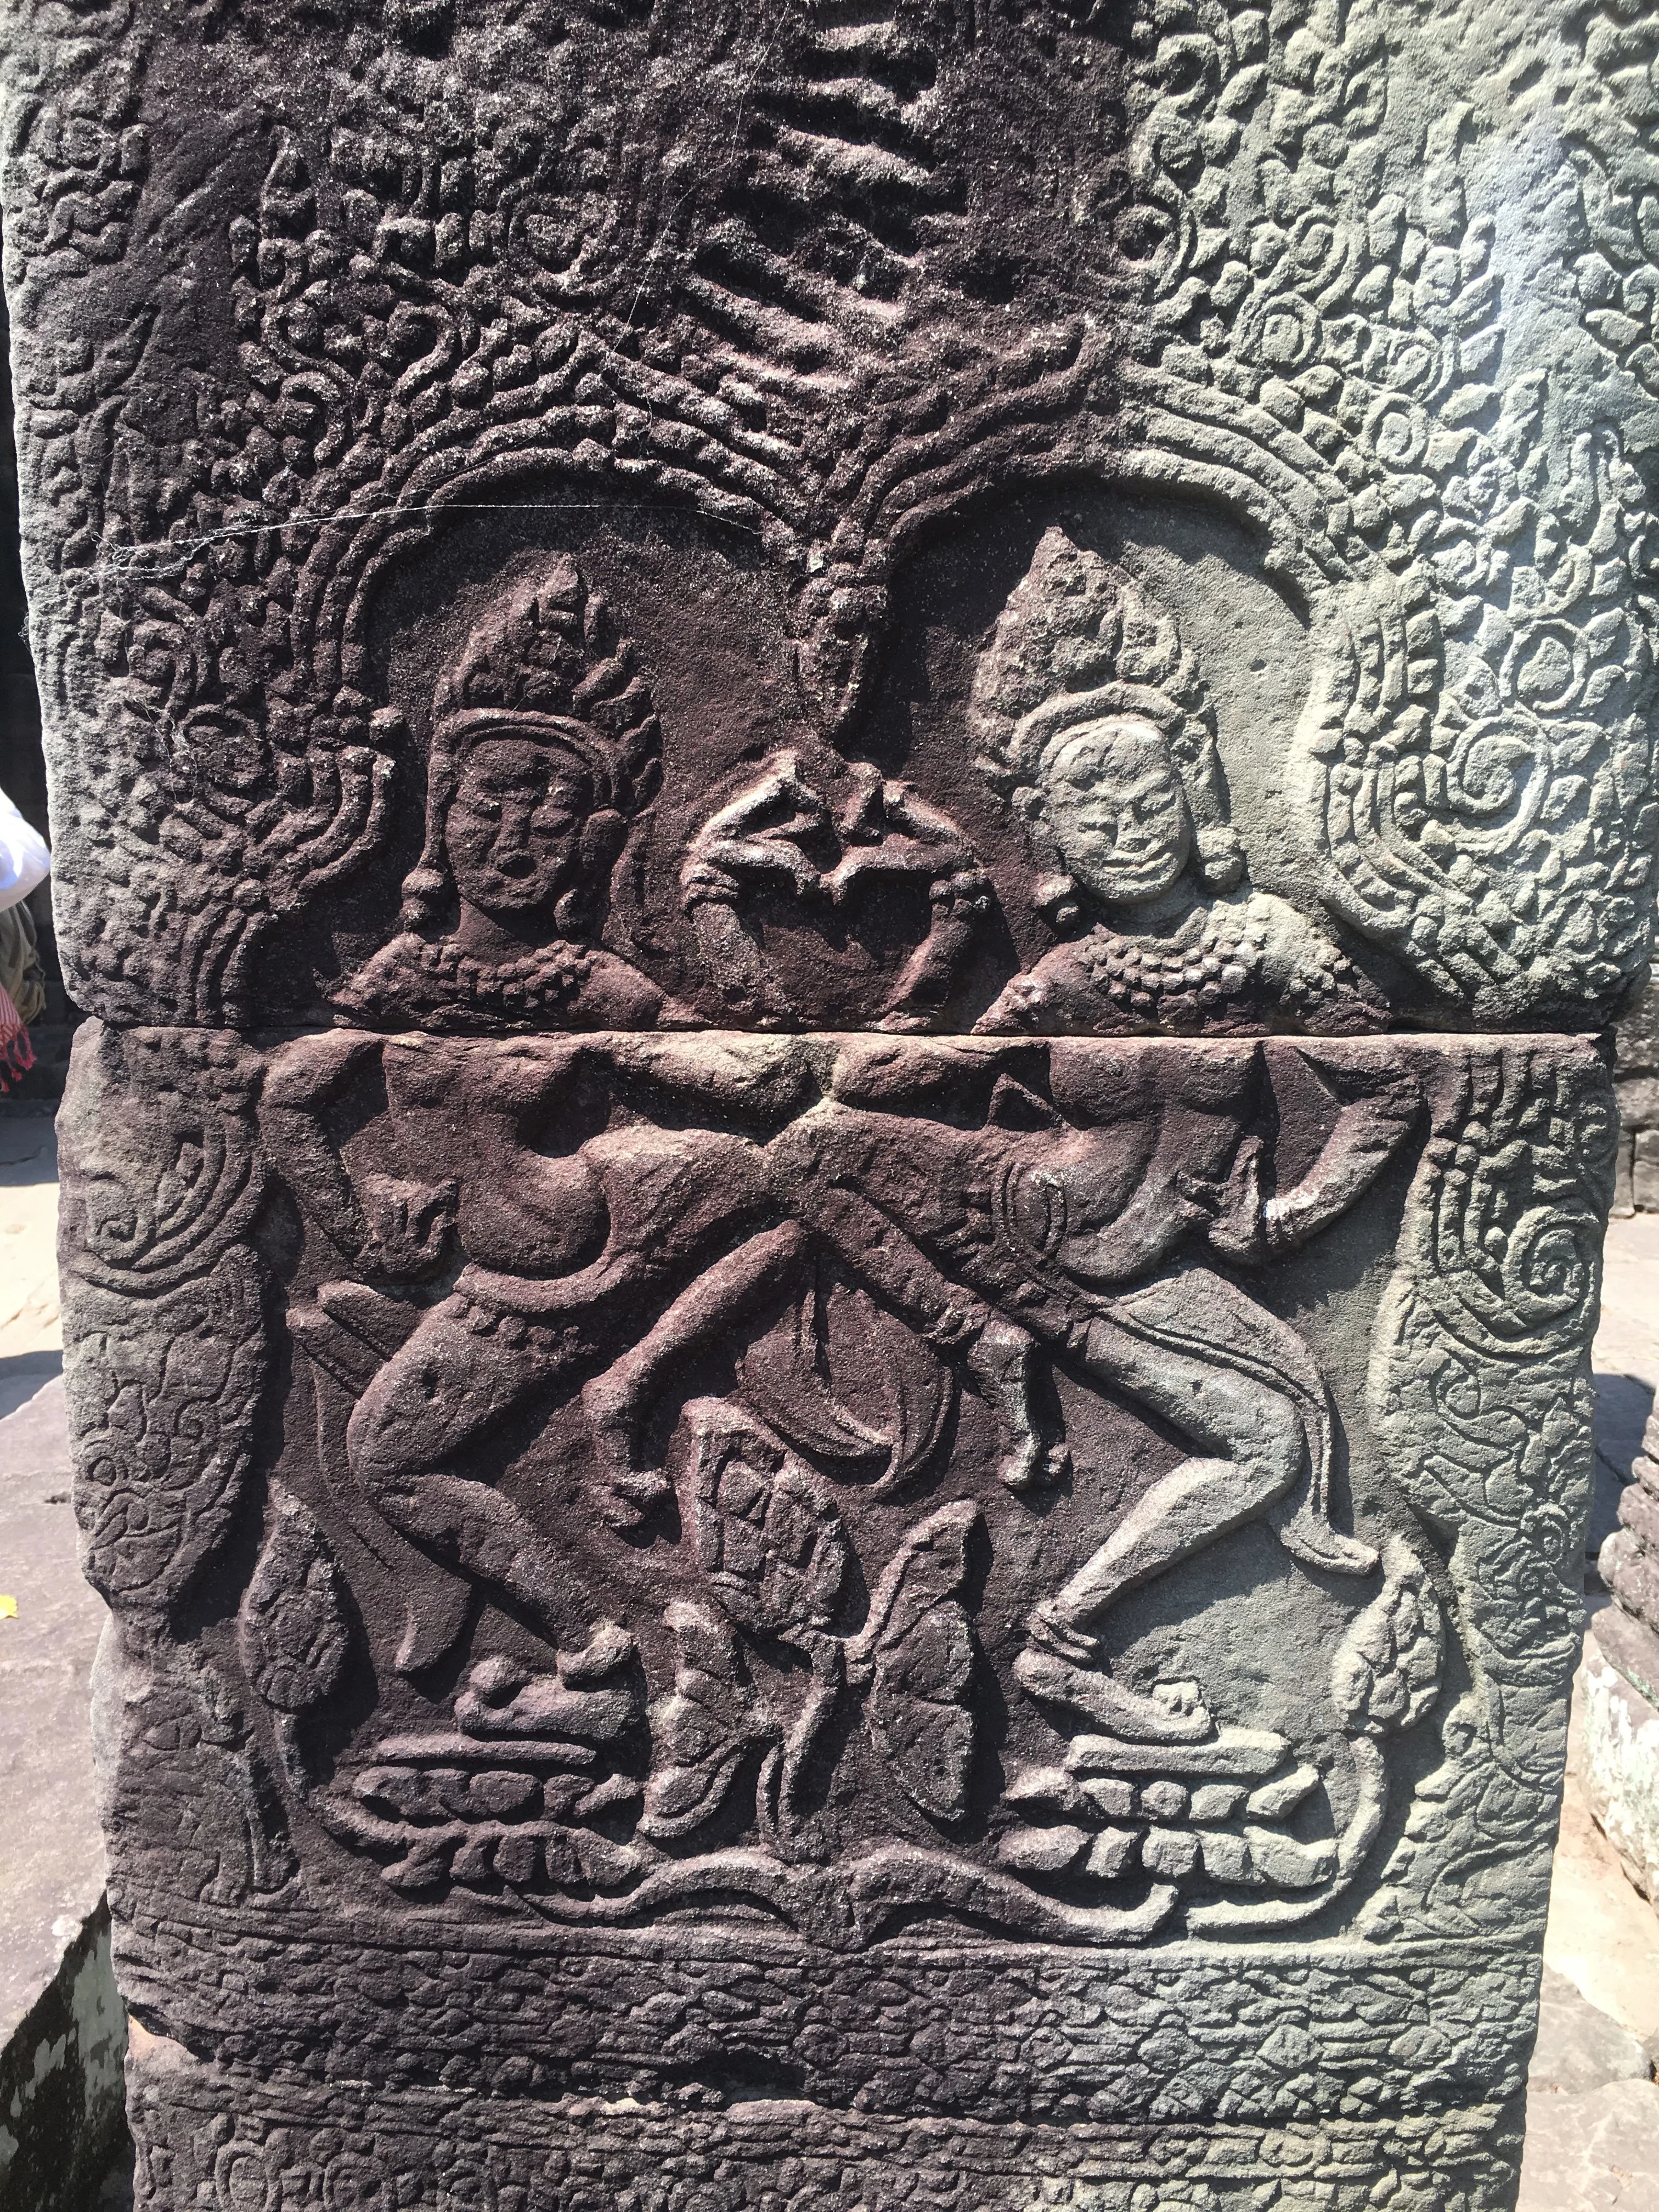 Dance of Apsaras on the Angkor Wat wall